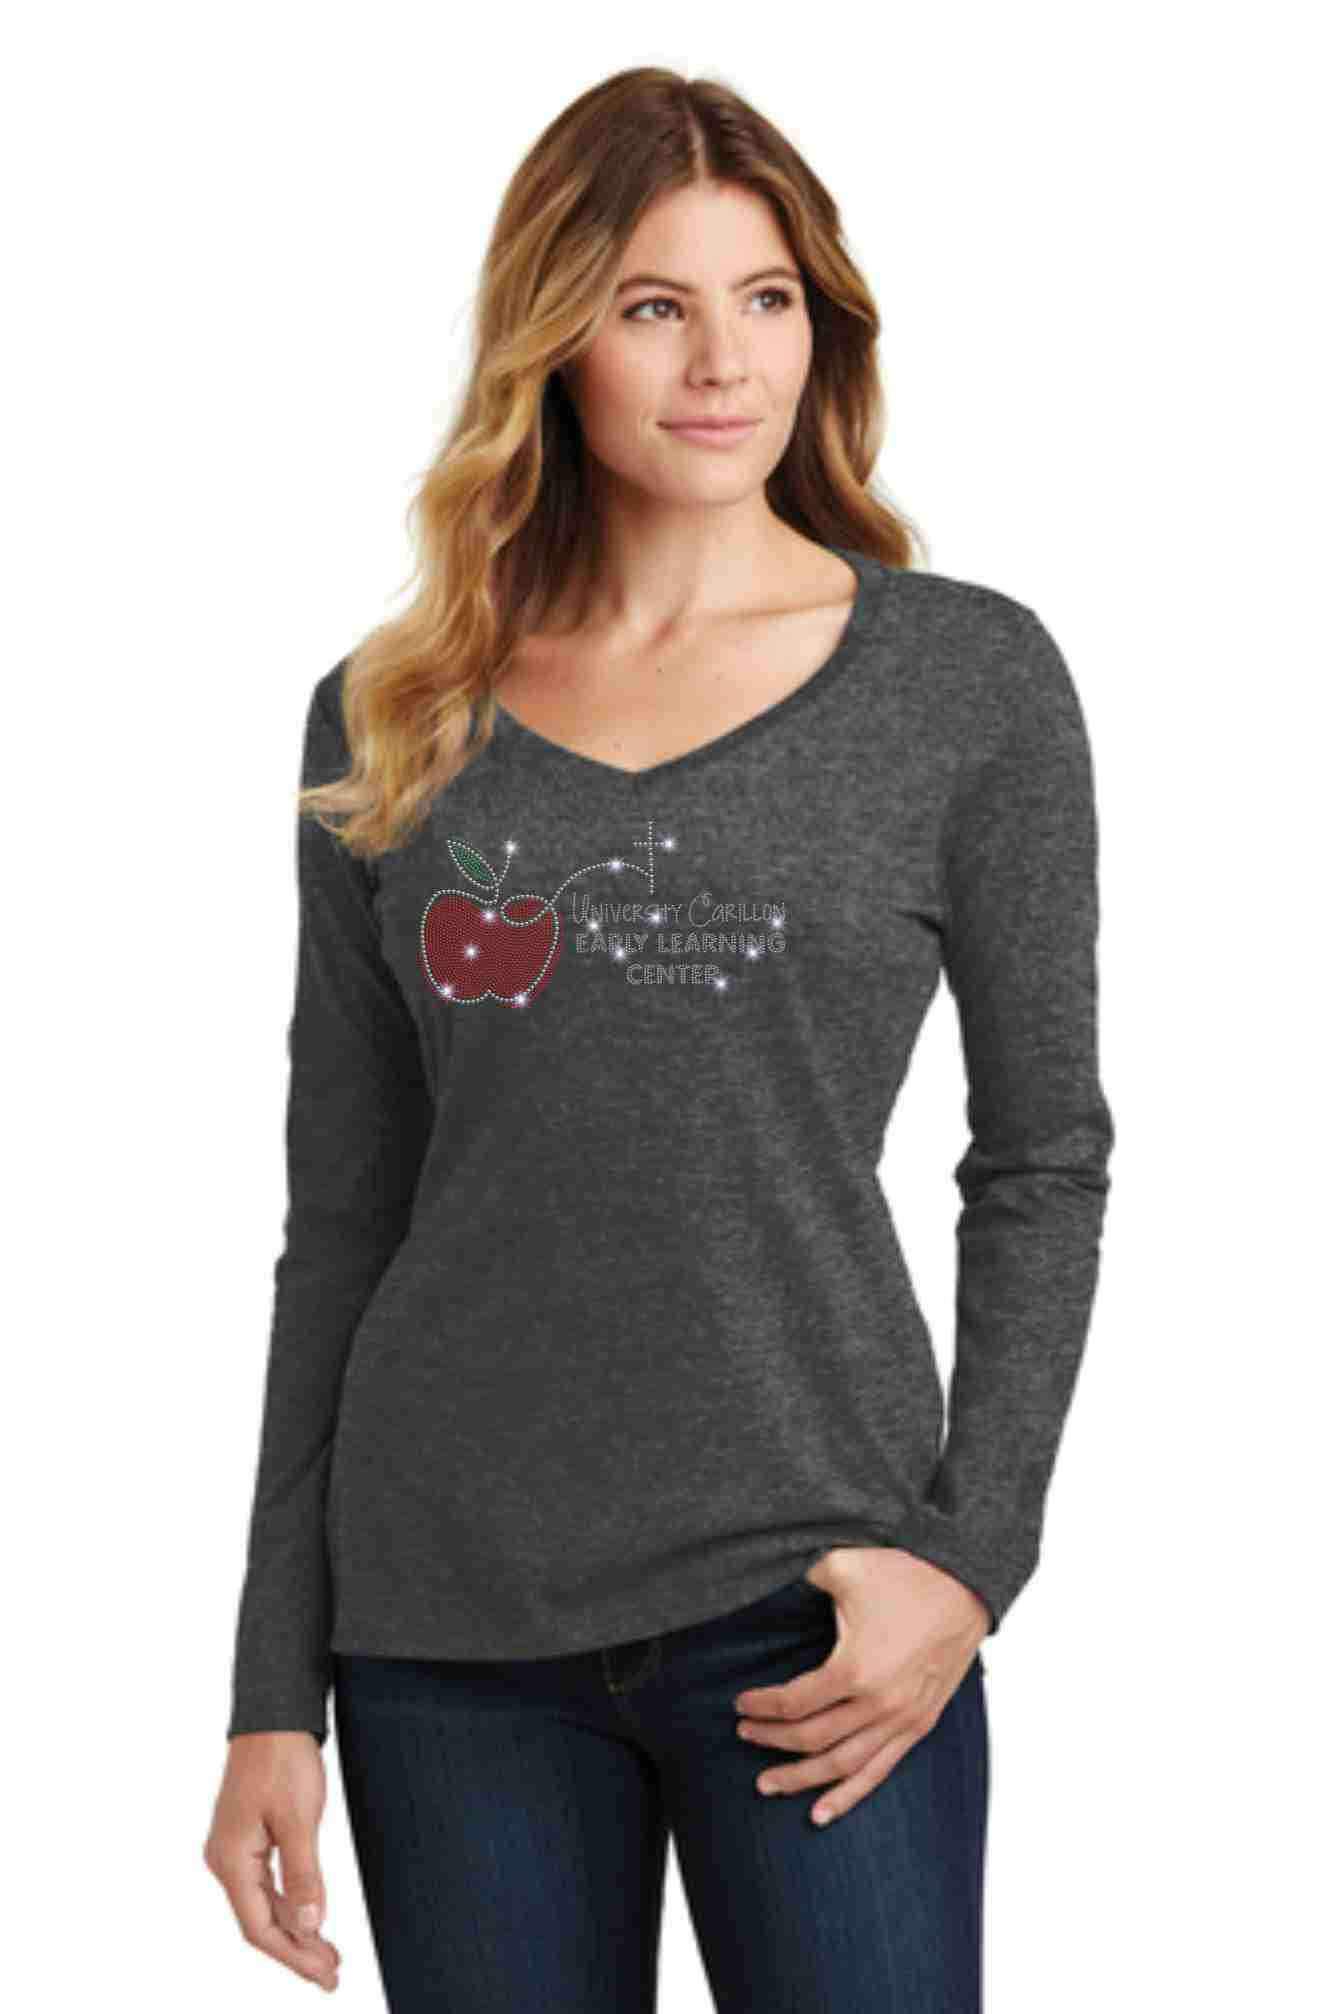 University Carillon Spangle Bling shirt - long sleeve v-neck Long Sleeve V-Neck Becky's Boutique XS Dark Heather Gray 